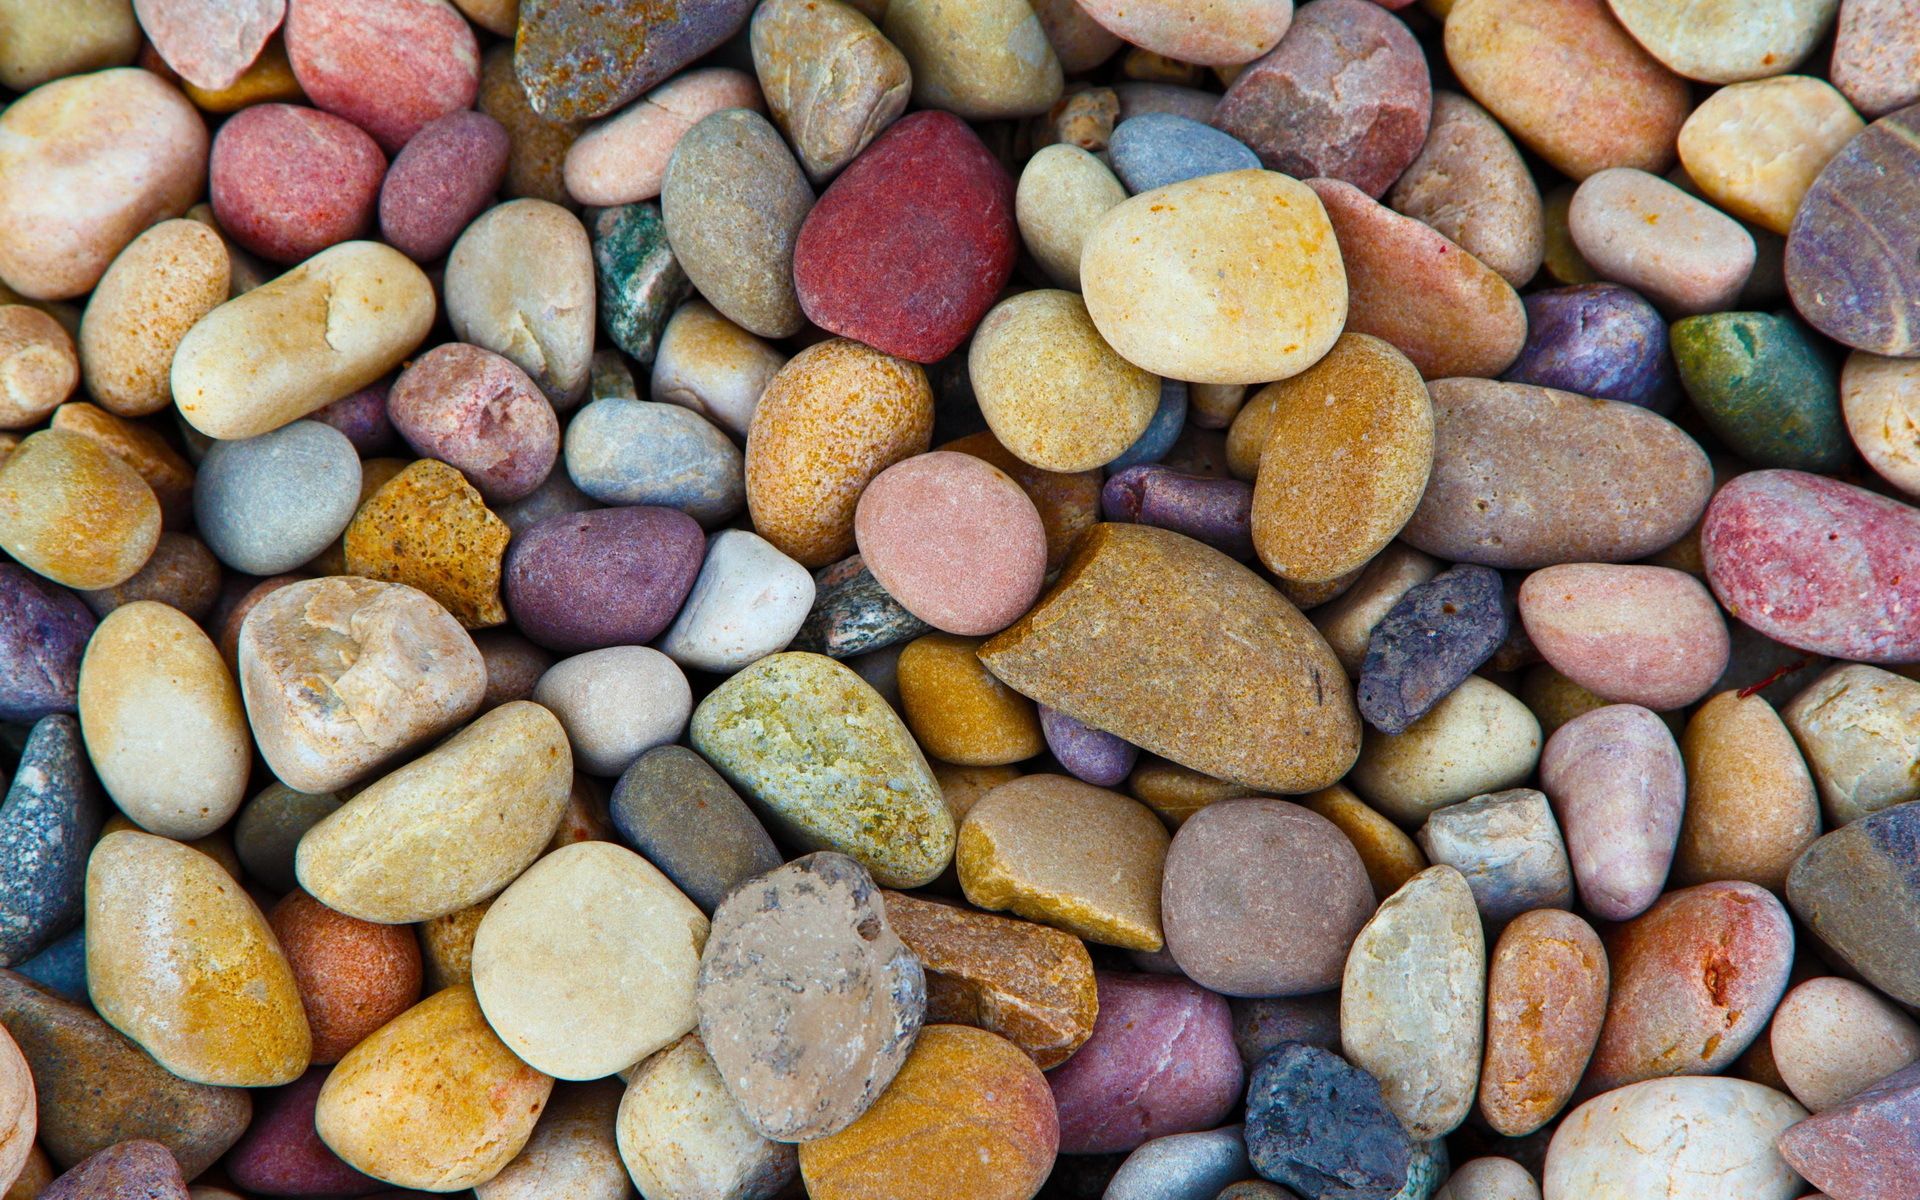 Wallpaper of colorful stones, pebbles, цветные камушки, Desktop ...